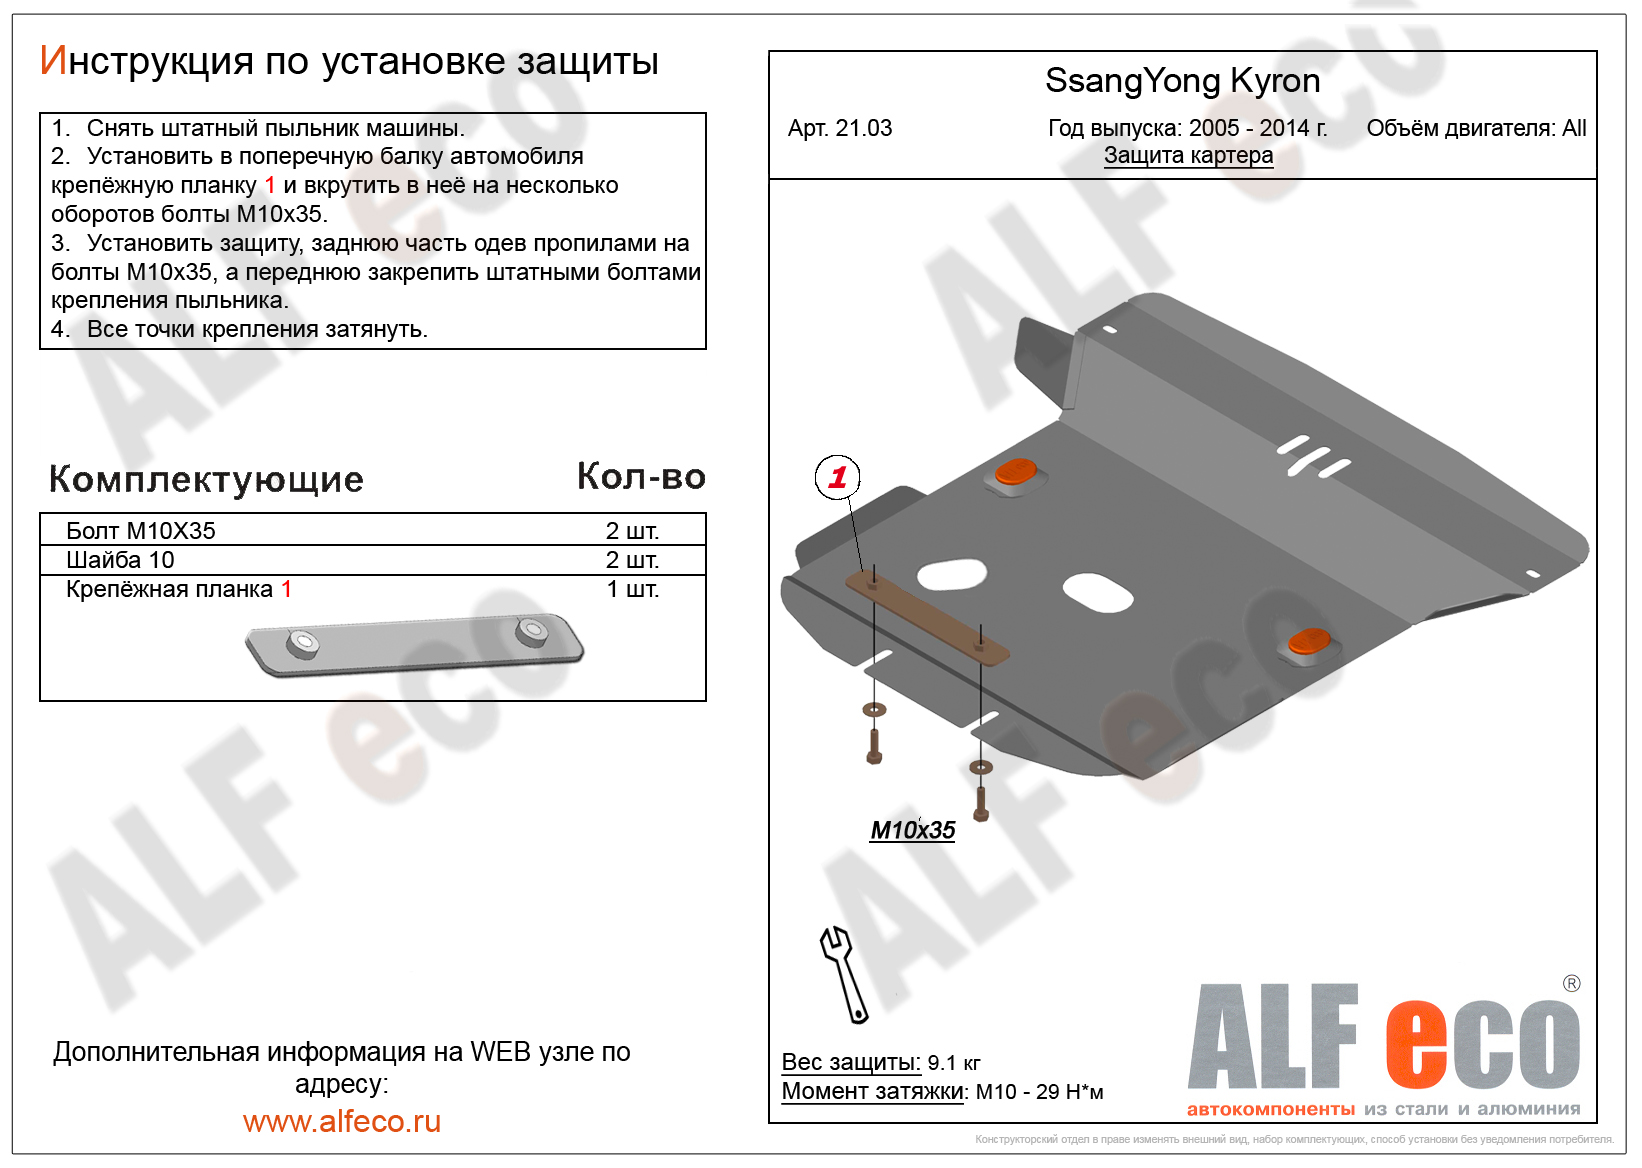 Защита  картера для SsangYong Kyron 2005-2015  V-all , ALFeco, алюминий 4мм, арт. ALF2103al